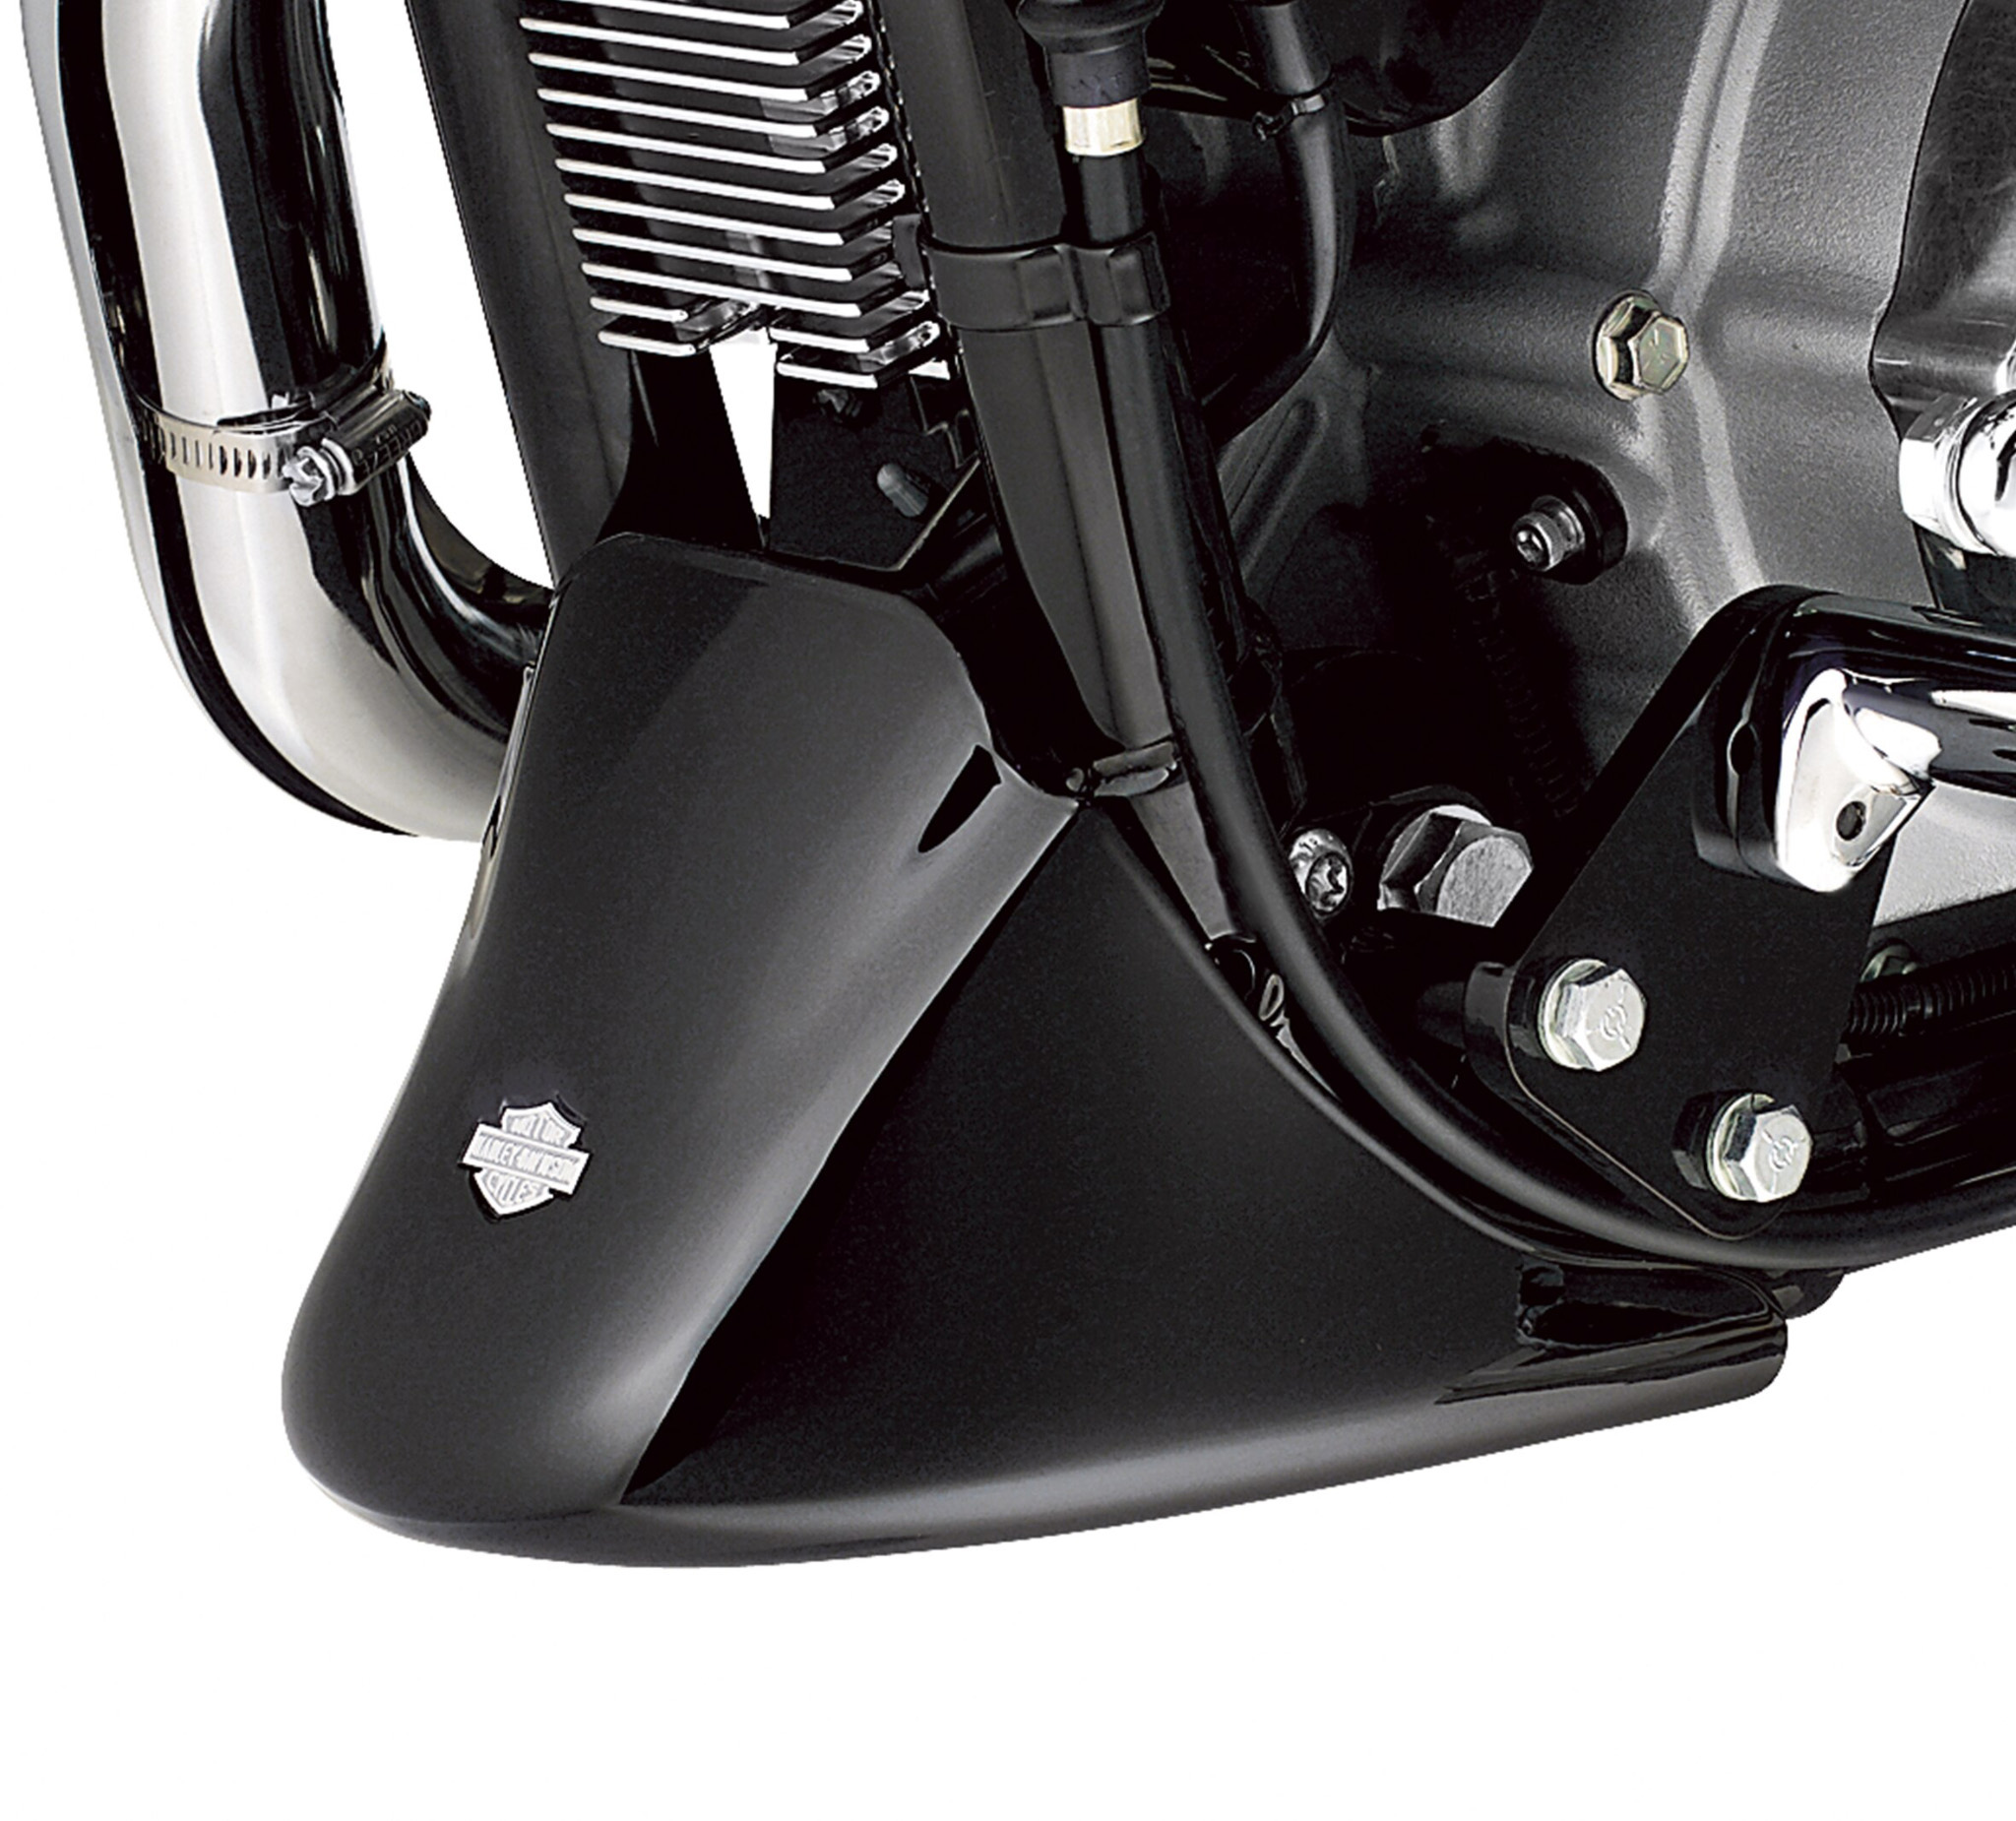 Front Bottom Spoiler Mudguard Cover For Harley Sportster 1200 XL Iron 883 04-16